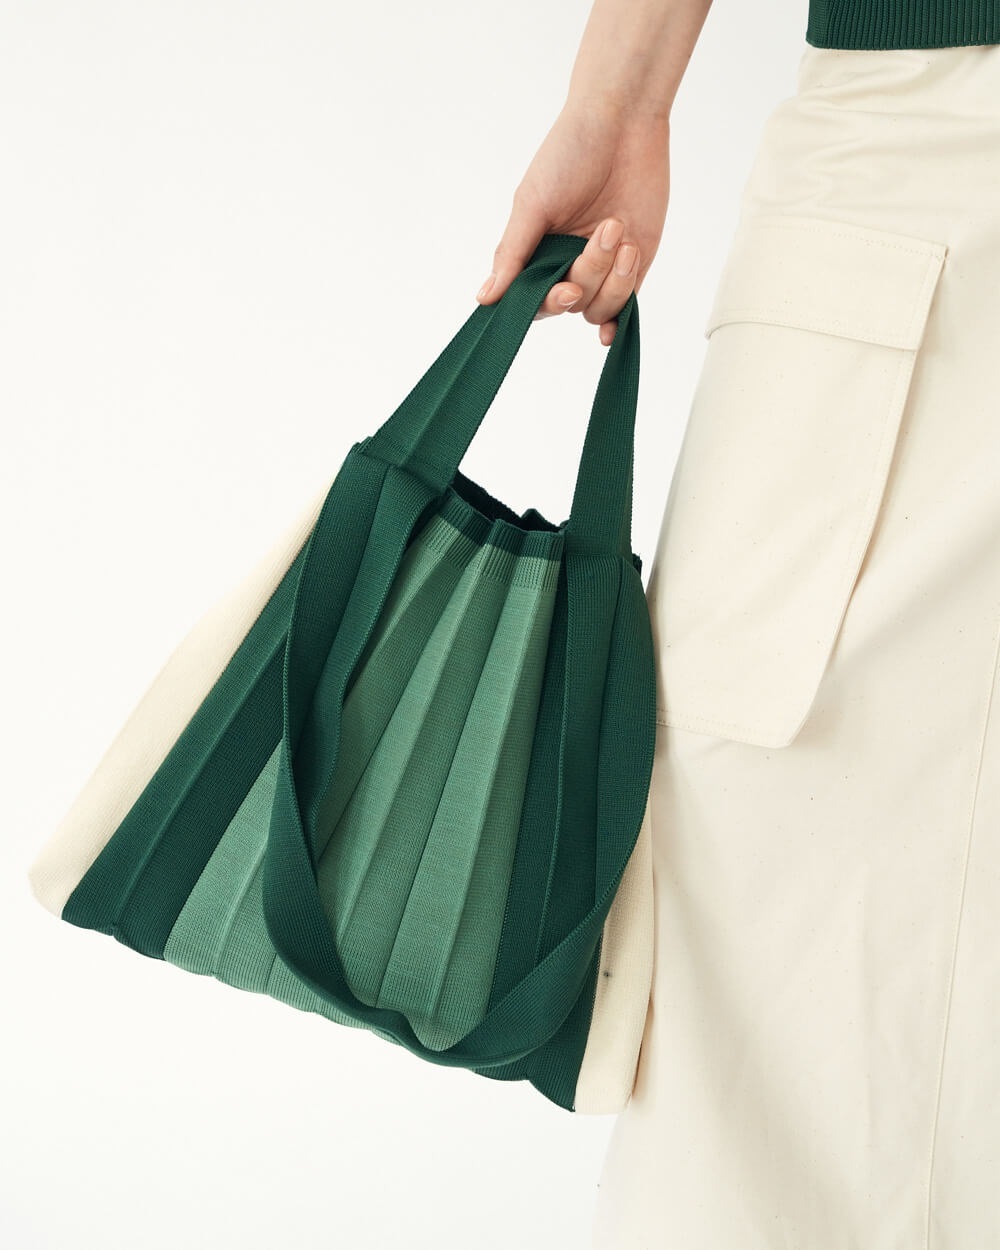 Pleatsmama 2-Way Shopper Bag $882